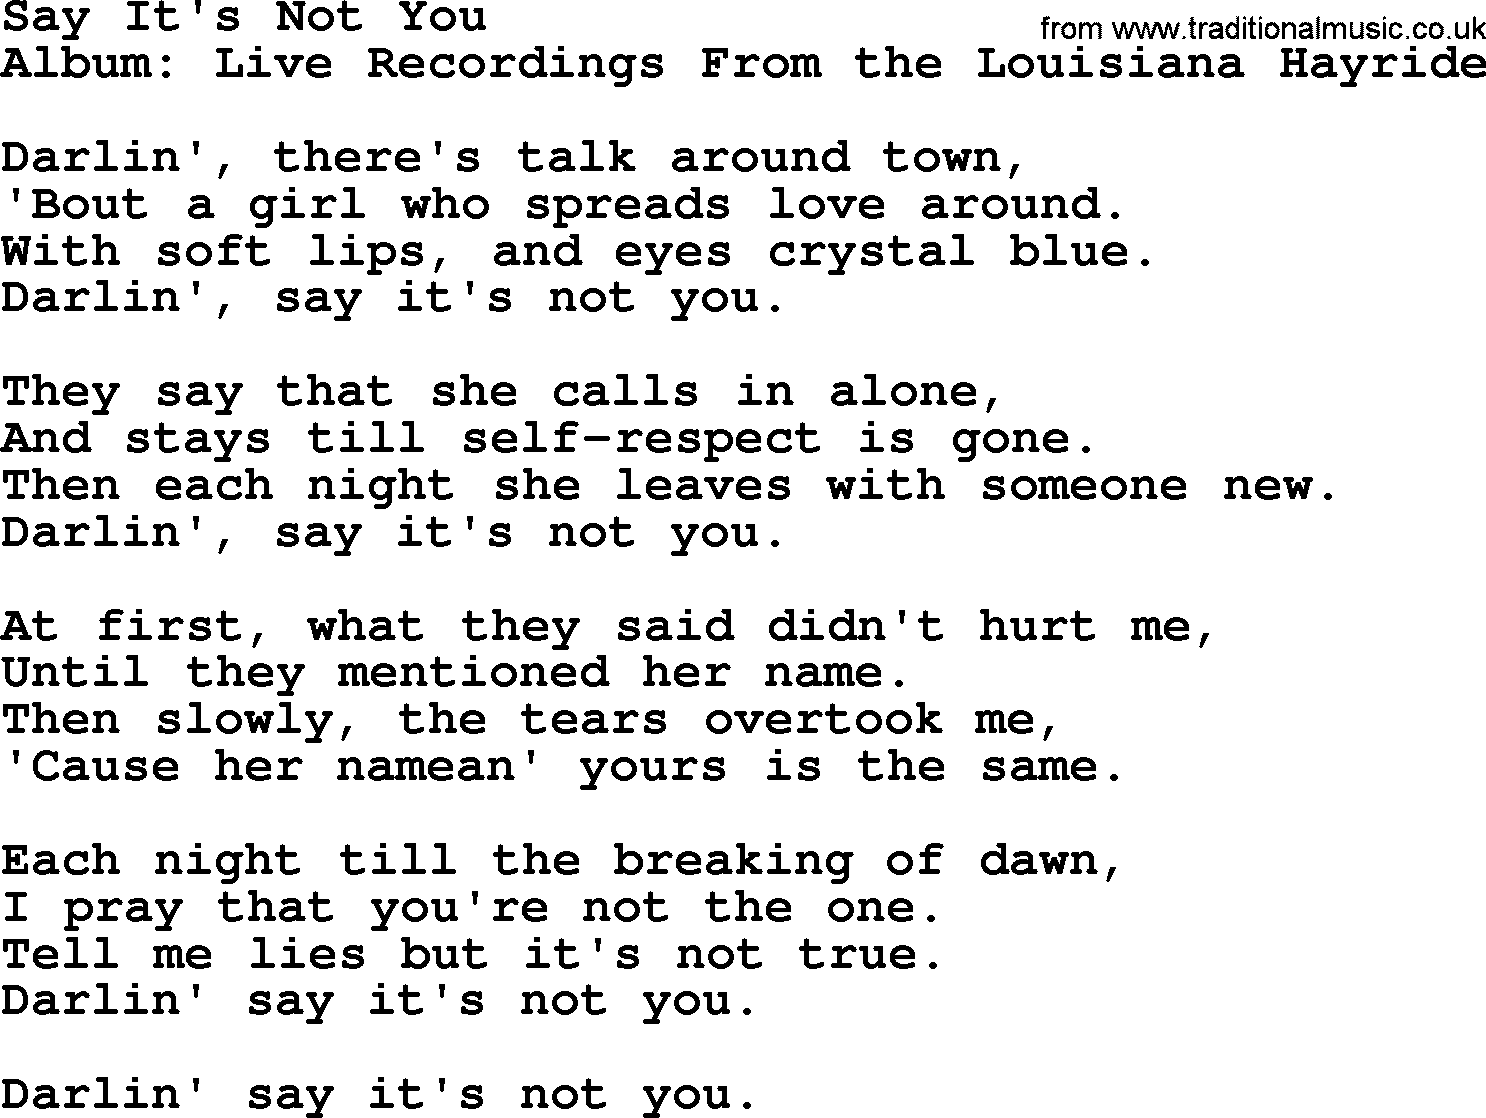 George Jones song: Say It's Not You, lyrics